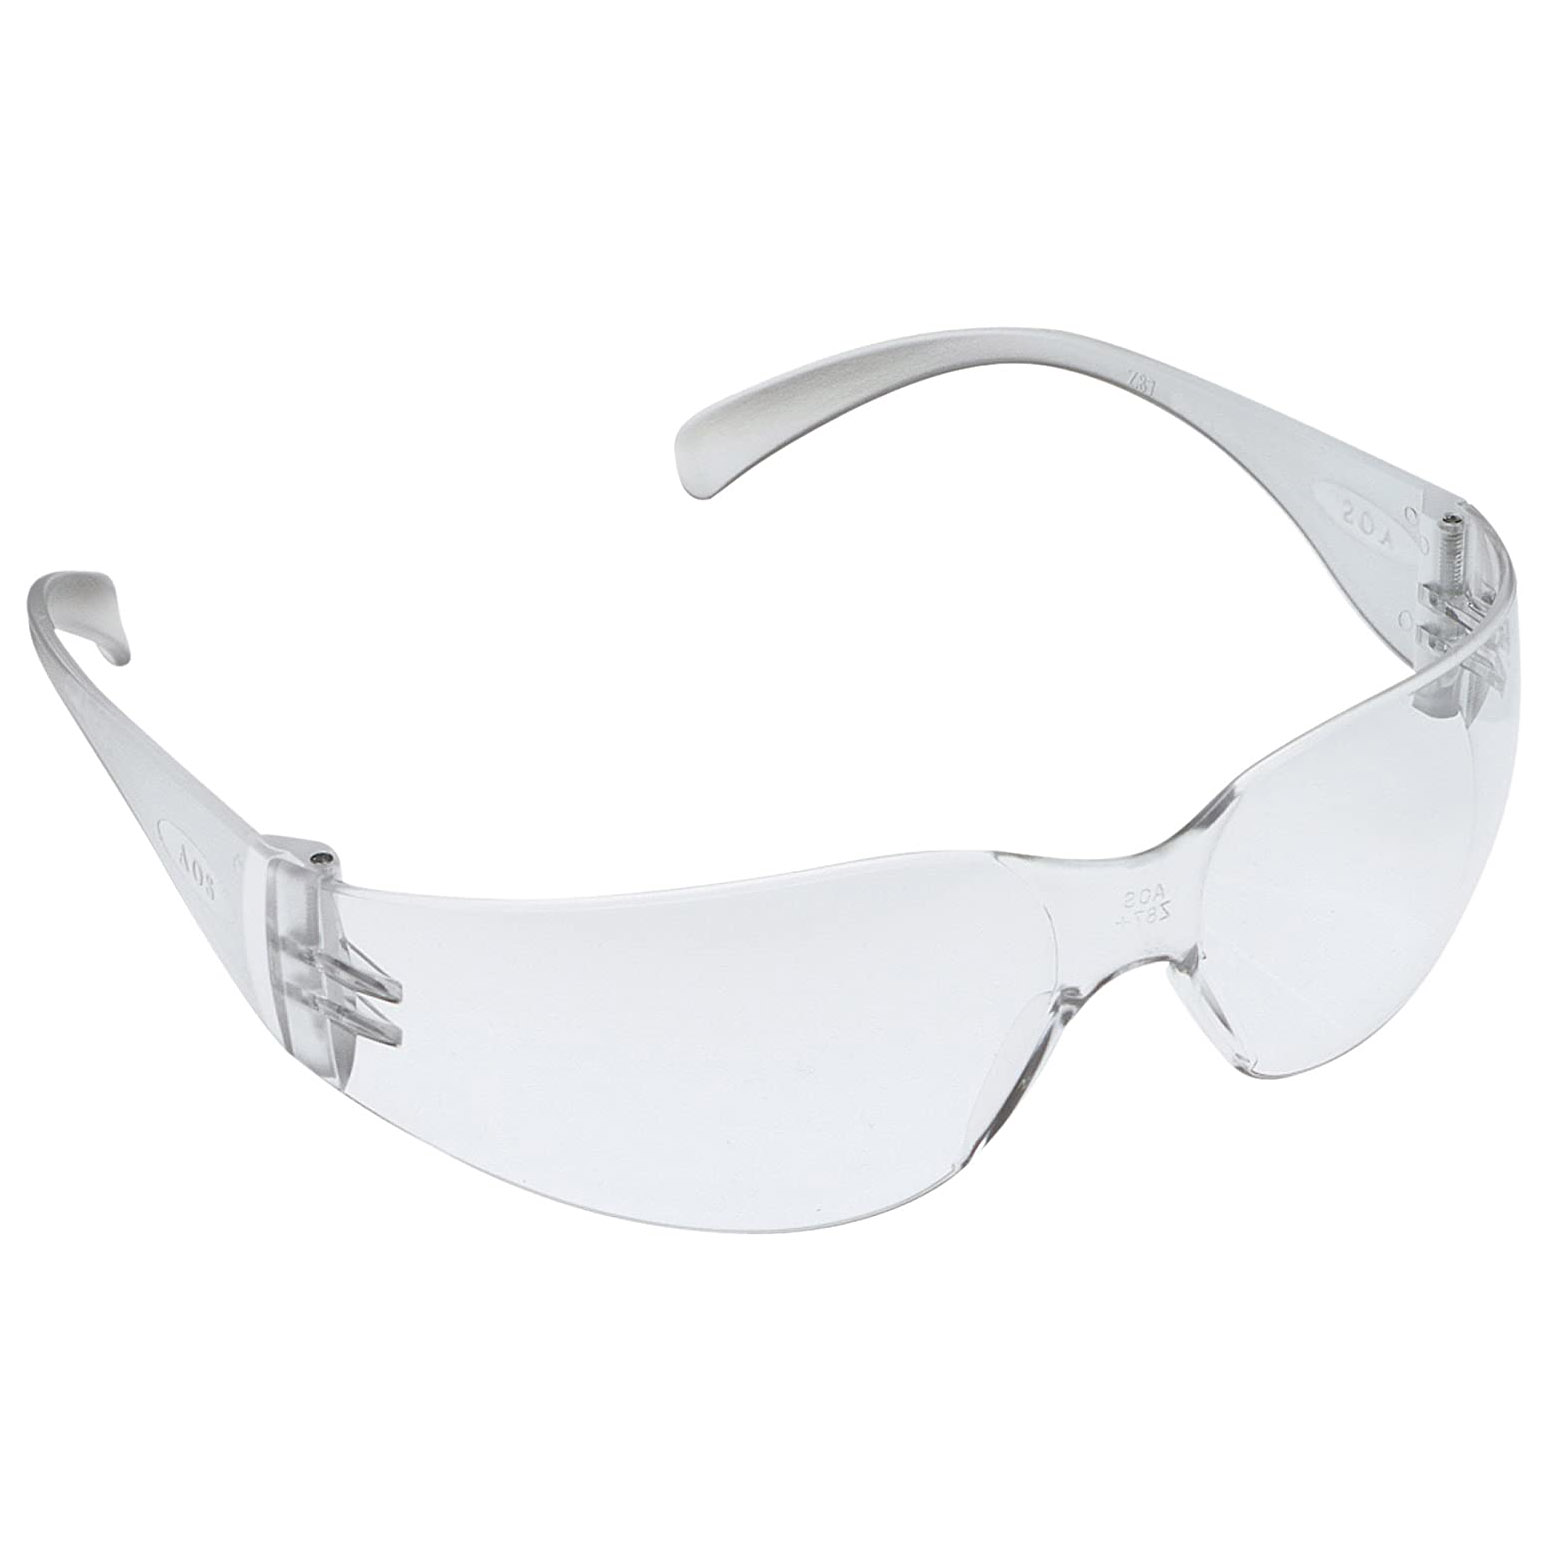 Buy 3M Safety Spectacles Vchc Virtrua Eyewear Clear Hard Coat Lens Online | Safety | Qetaat.com